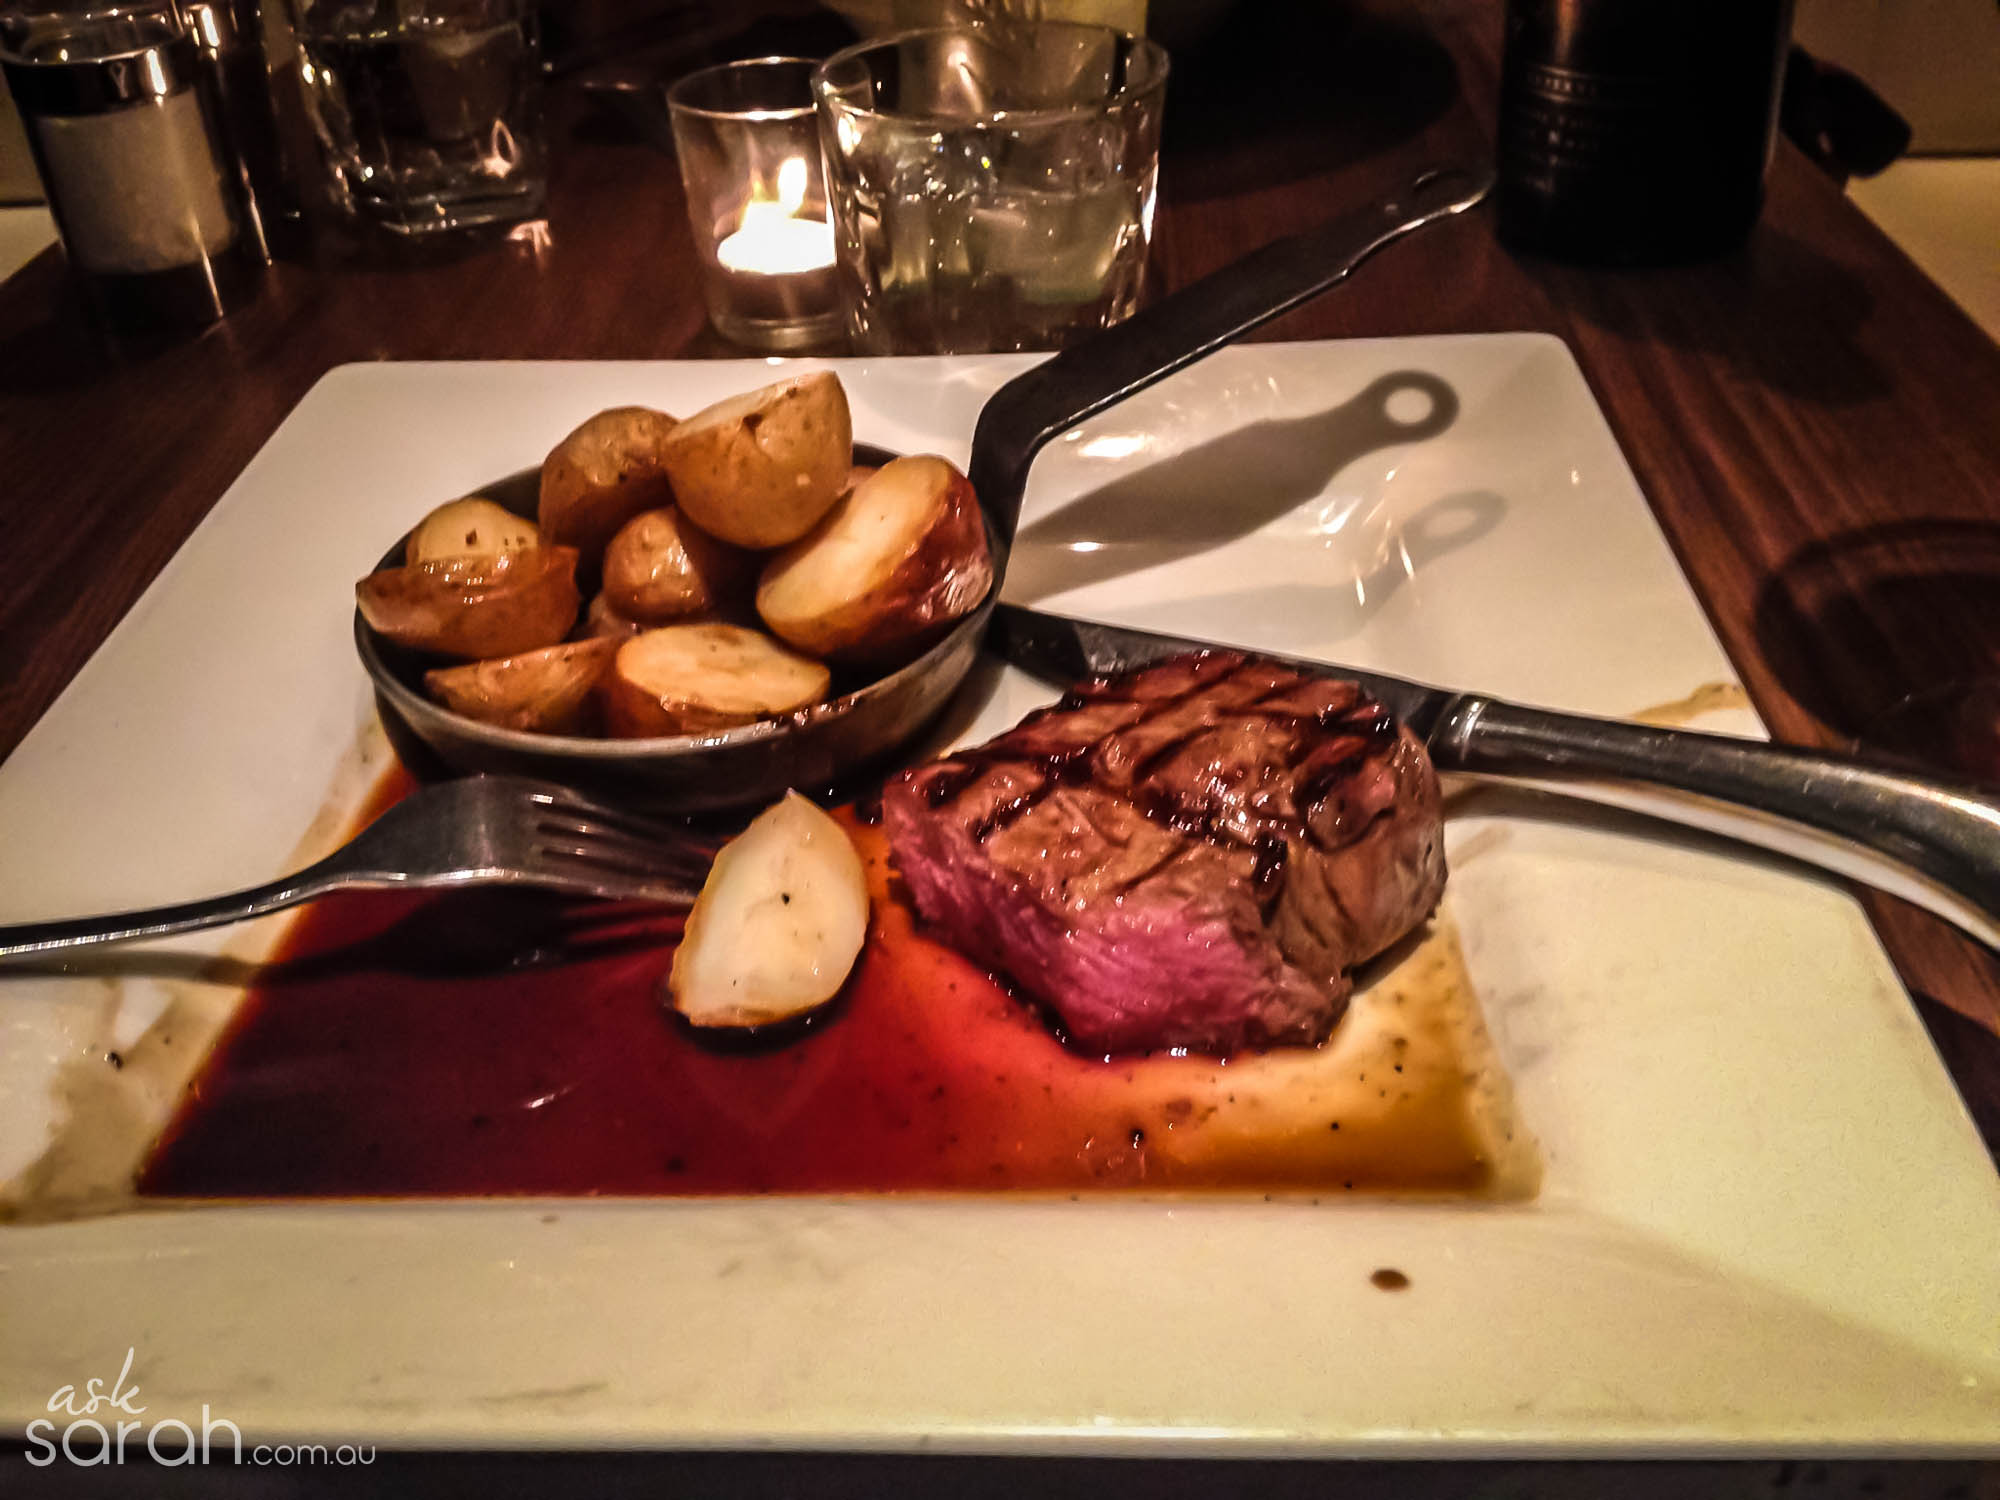 Dine Hear Review: The Gastro Pub {Win 1 of 3 iPad Minis}